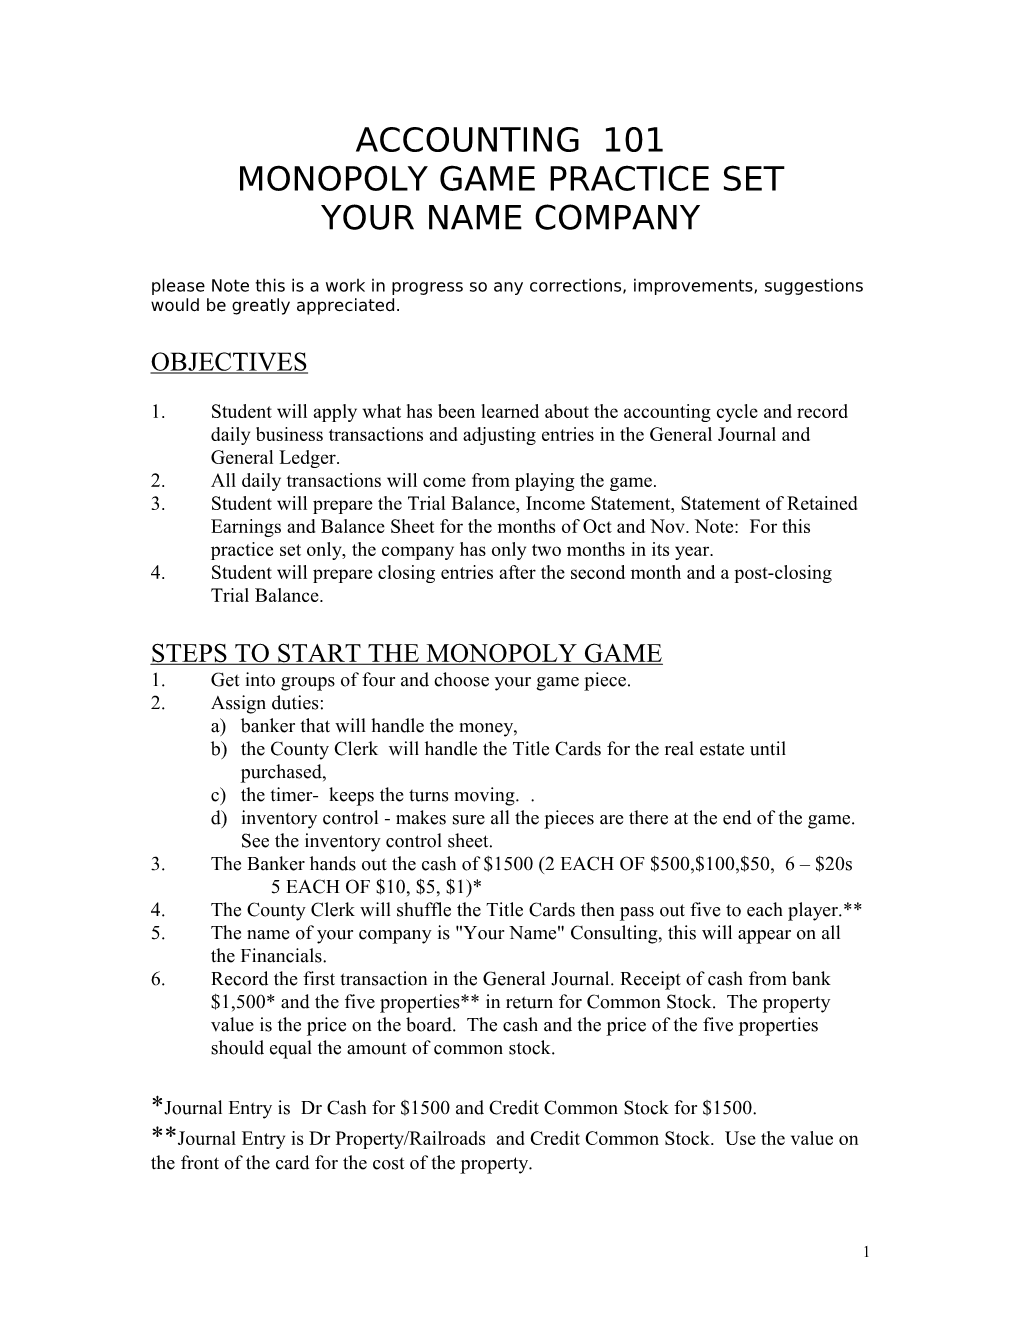 Monopoly Game Practice Set s1